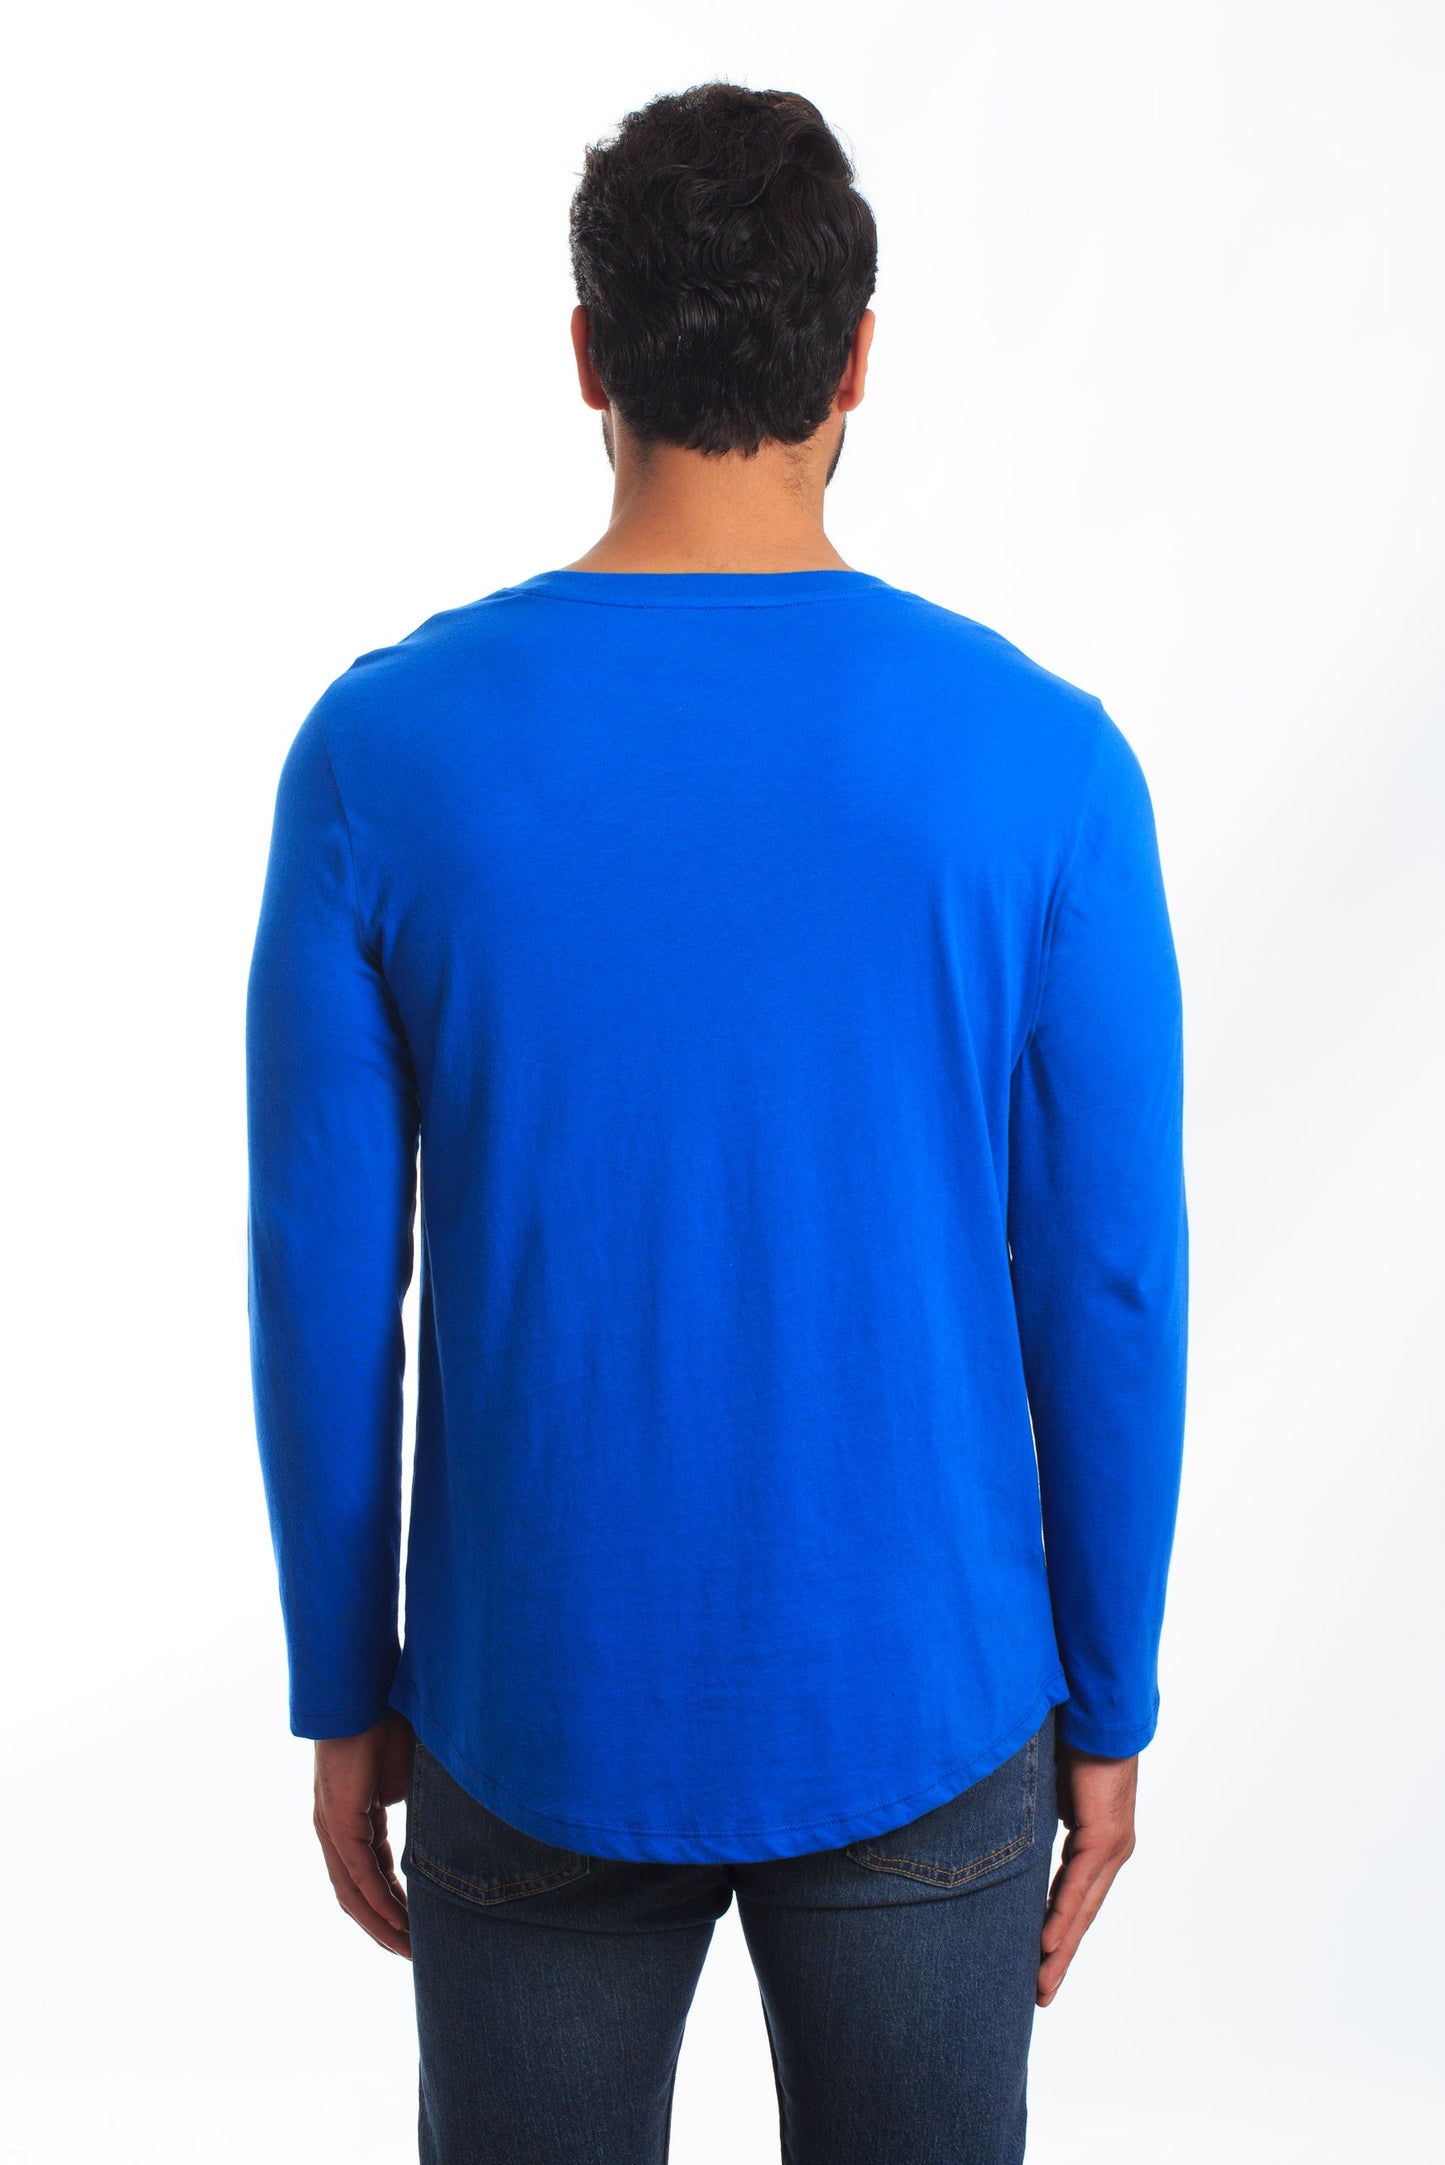 Blue Long Sleeve T-Shirt TEL-109 Back